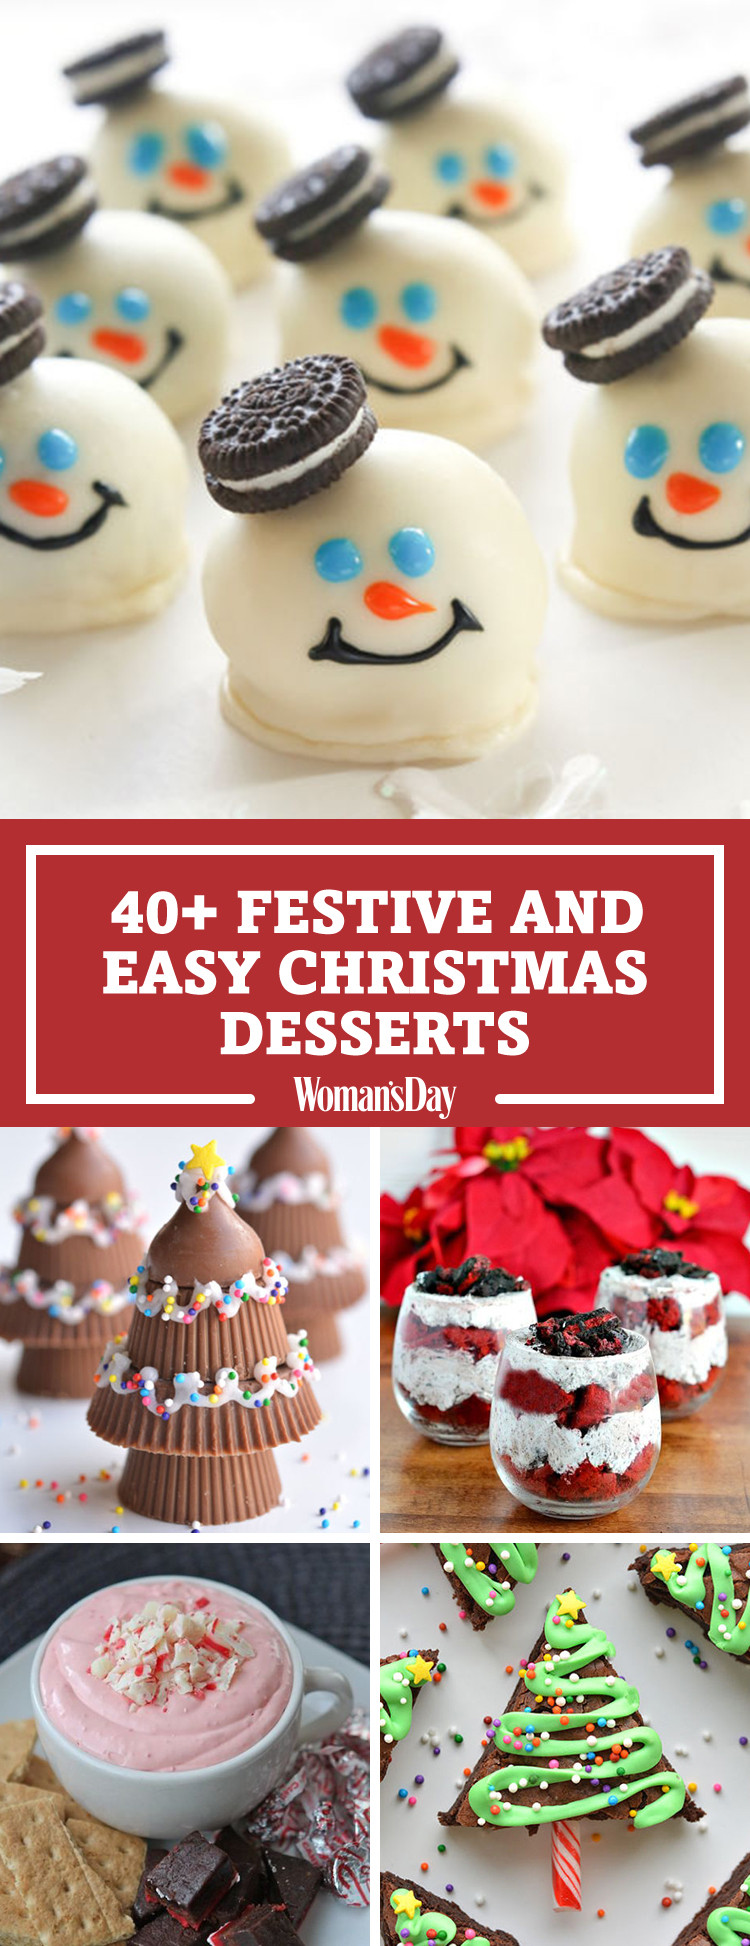 Simple Christmas Desserts
 57 Easy Christmas Dessert Recipes Best Ideas for Fun